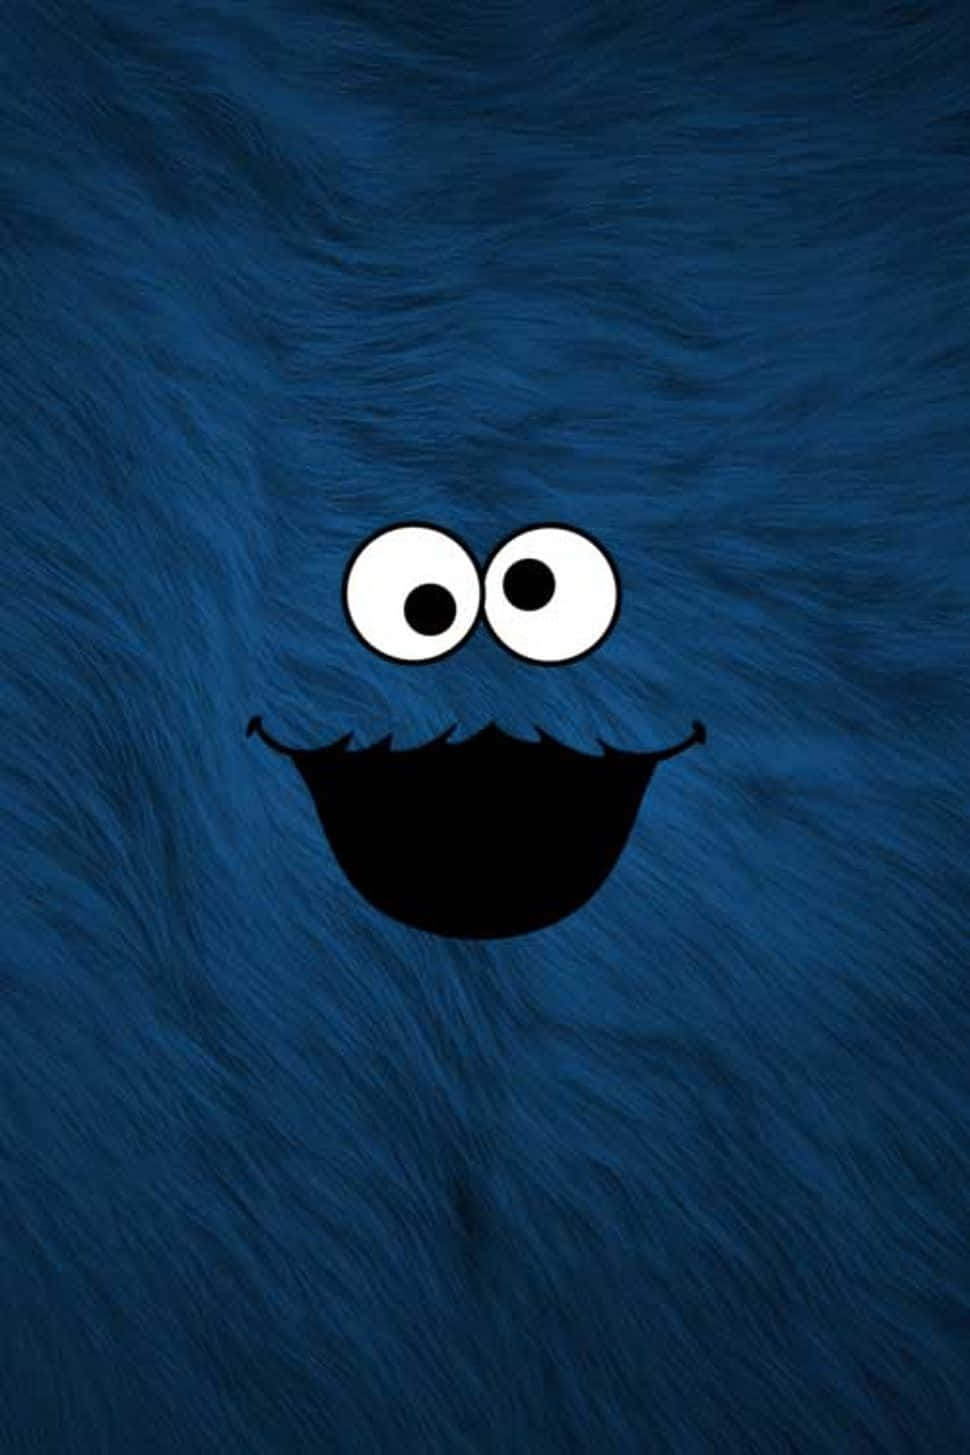 Fun-loving Cookie Monster enjoying some tasty treats